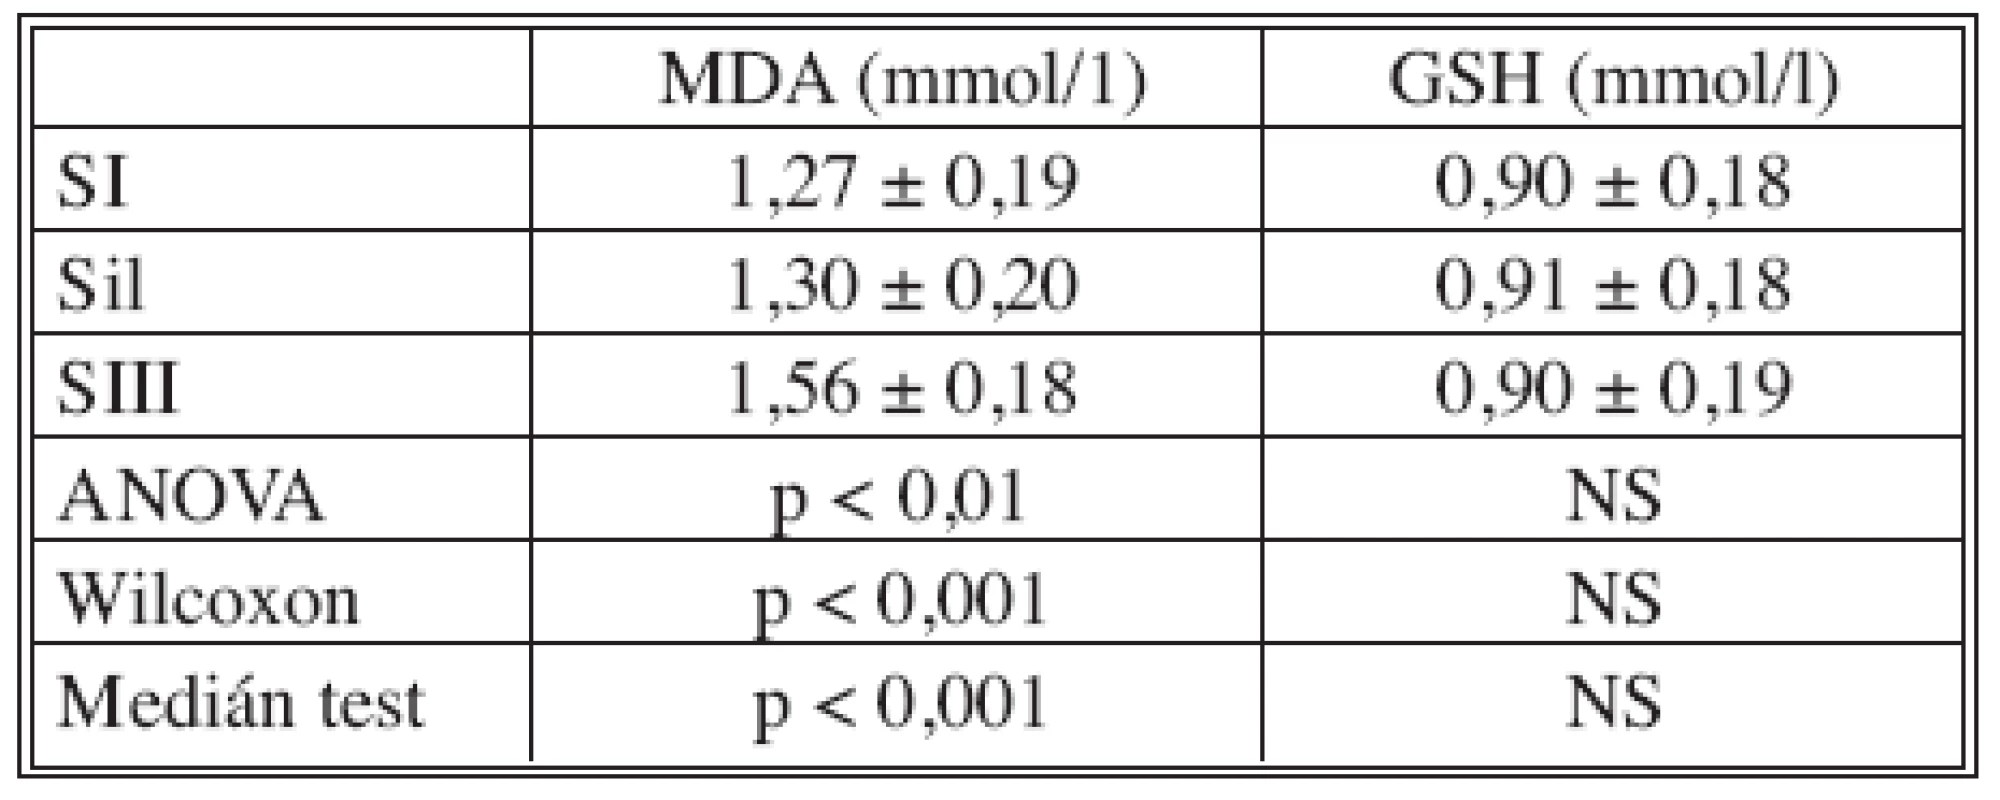 Průměrné plazmatické hladiny MDA a GSH u SI (N = 14), SII (N = 14) a SIII (N = 13) vypočítané z naměřených plazmatických hladin sledovaných faktorů v 0, 20, 60 a 120 minut experimentu
Tab. 2. Mean plasmatic MDA and GSH values in SI (N = 14), SII (N = 14) and SIII (N = 13), calculated from the recorded plasmatic levels of the studied factors at 0, 20, 60 and l20 minutes